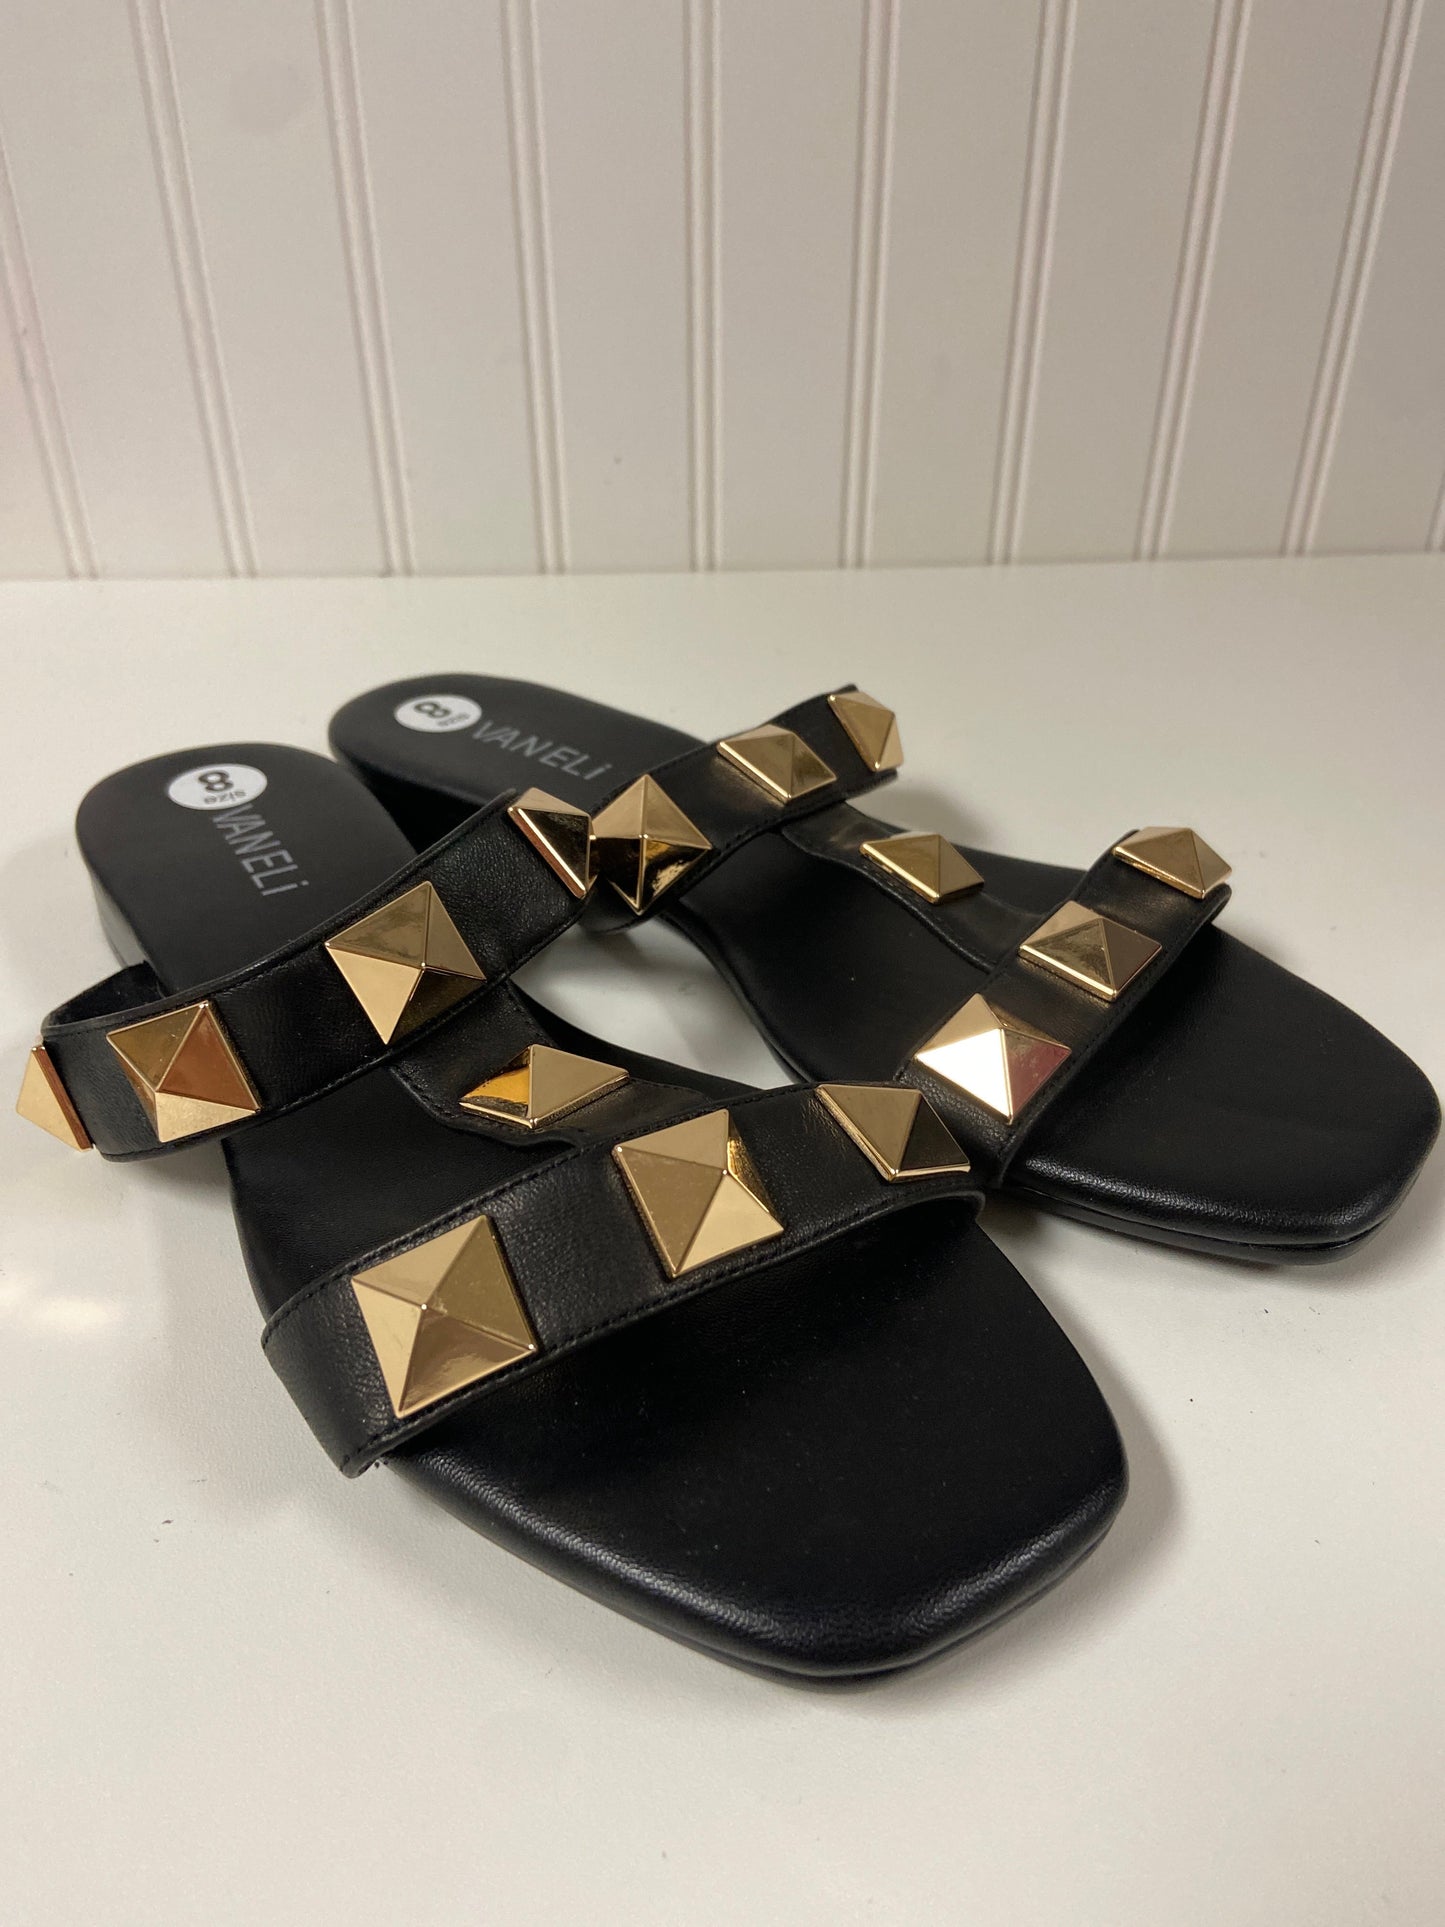 Black & Gold Sandals Flats Vaneli, Size 8